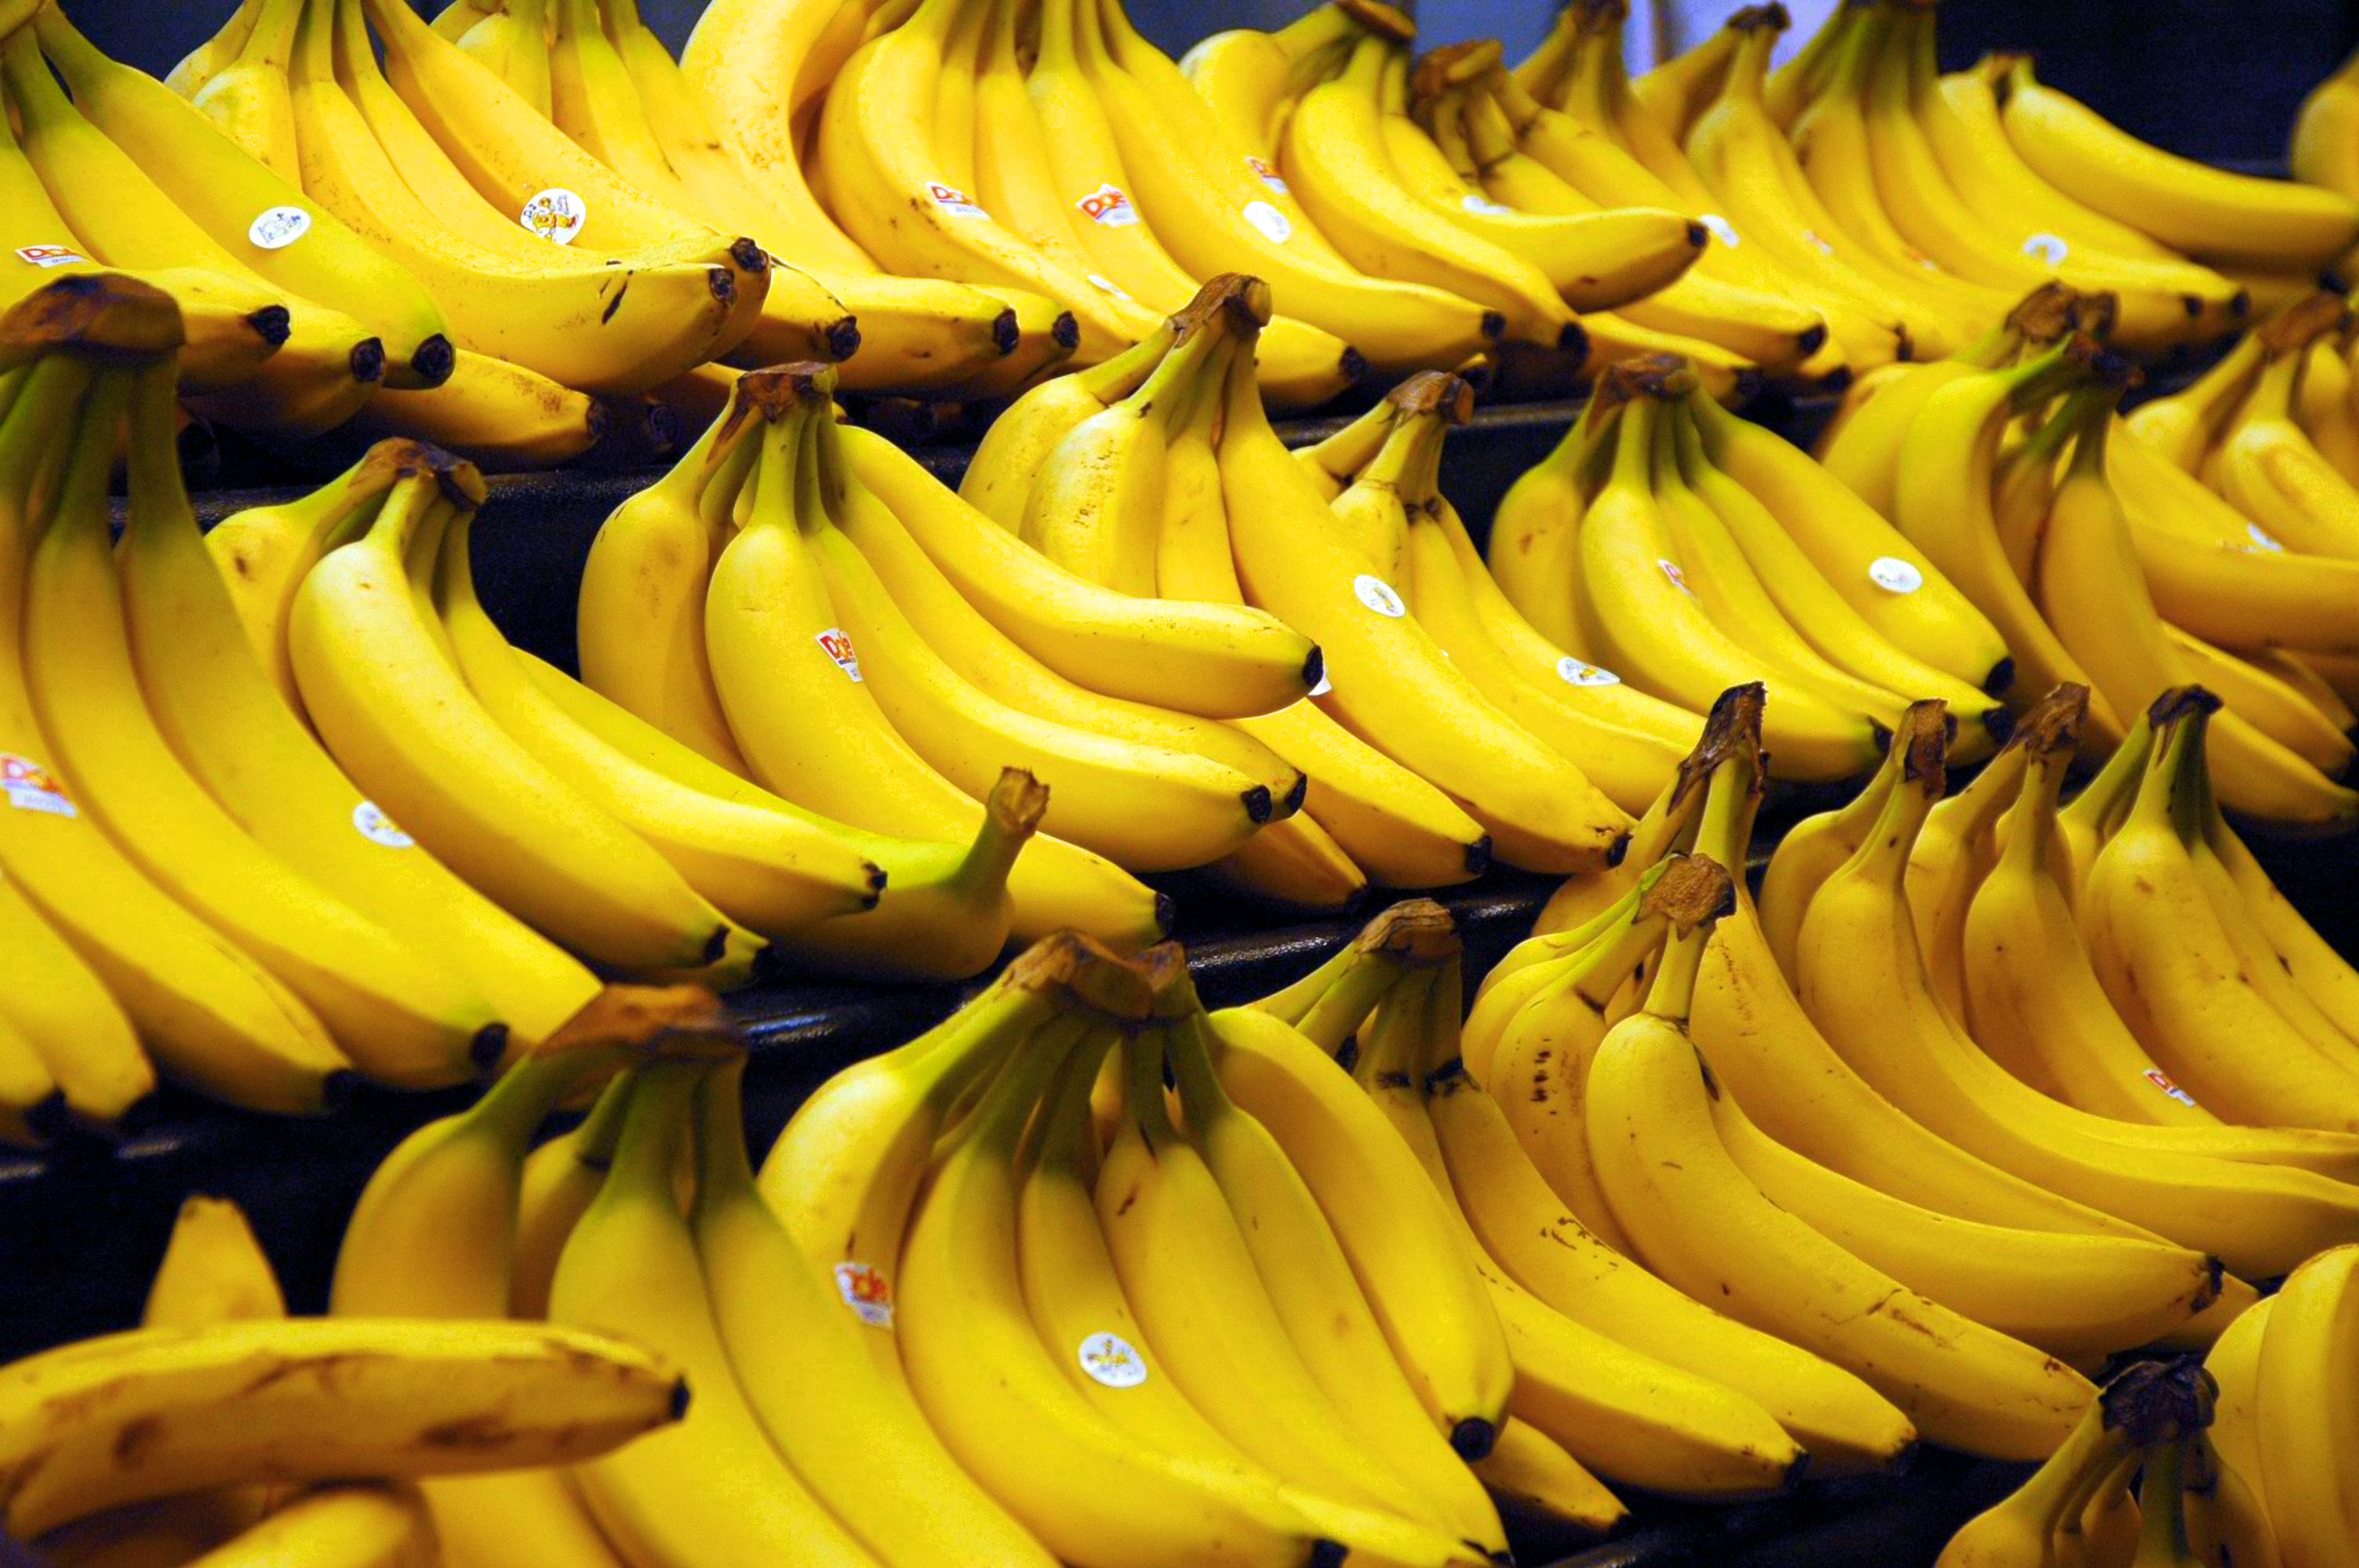 File:Bananas.jpg - Wikimedia Commons